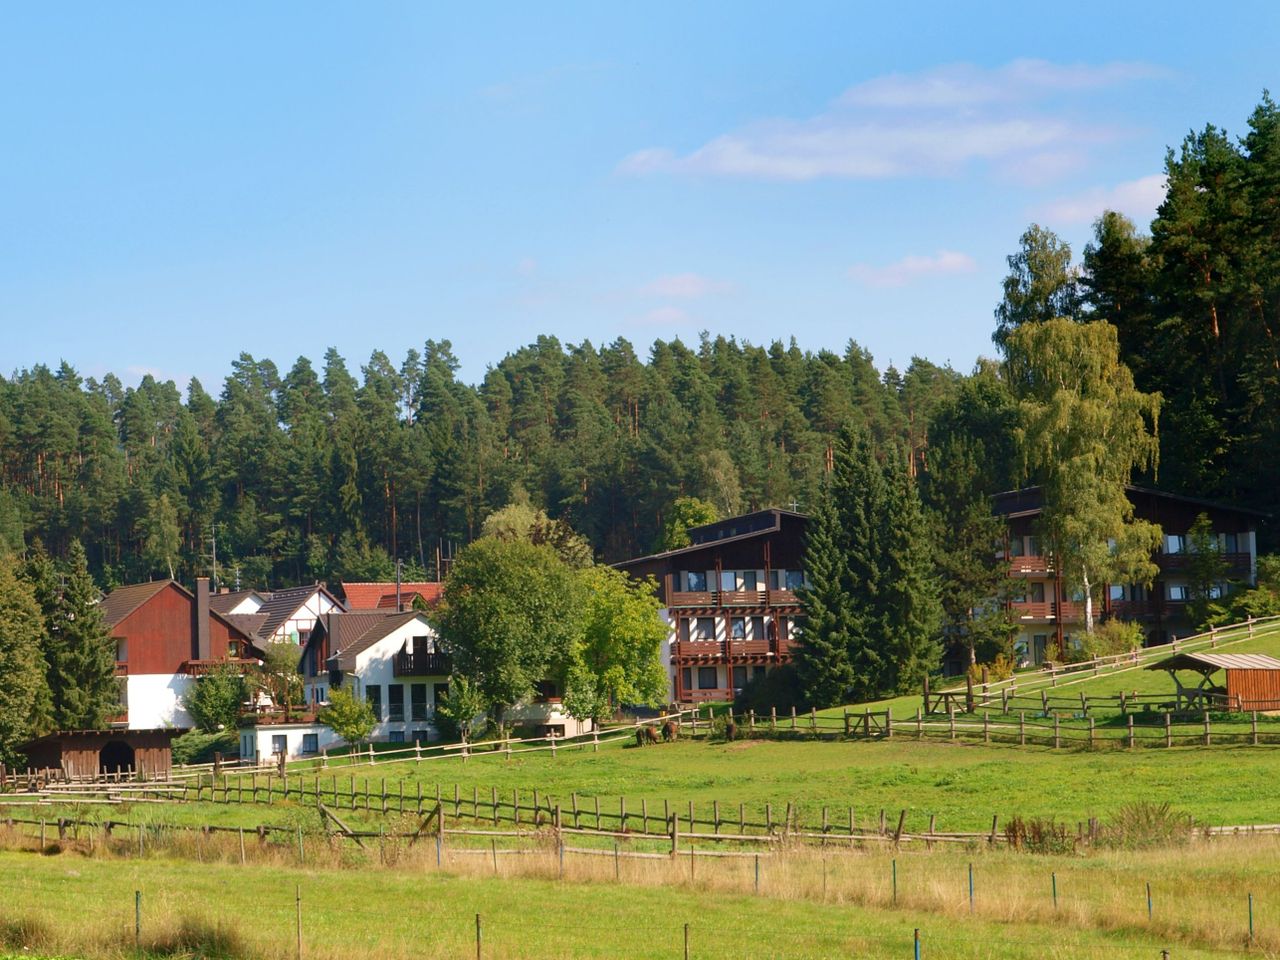 3 Tage Frankenwald: Wellness, Naturbad & Kulinarik